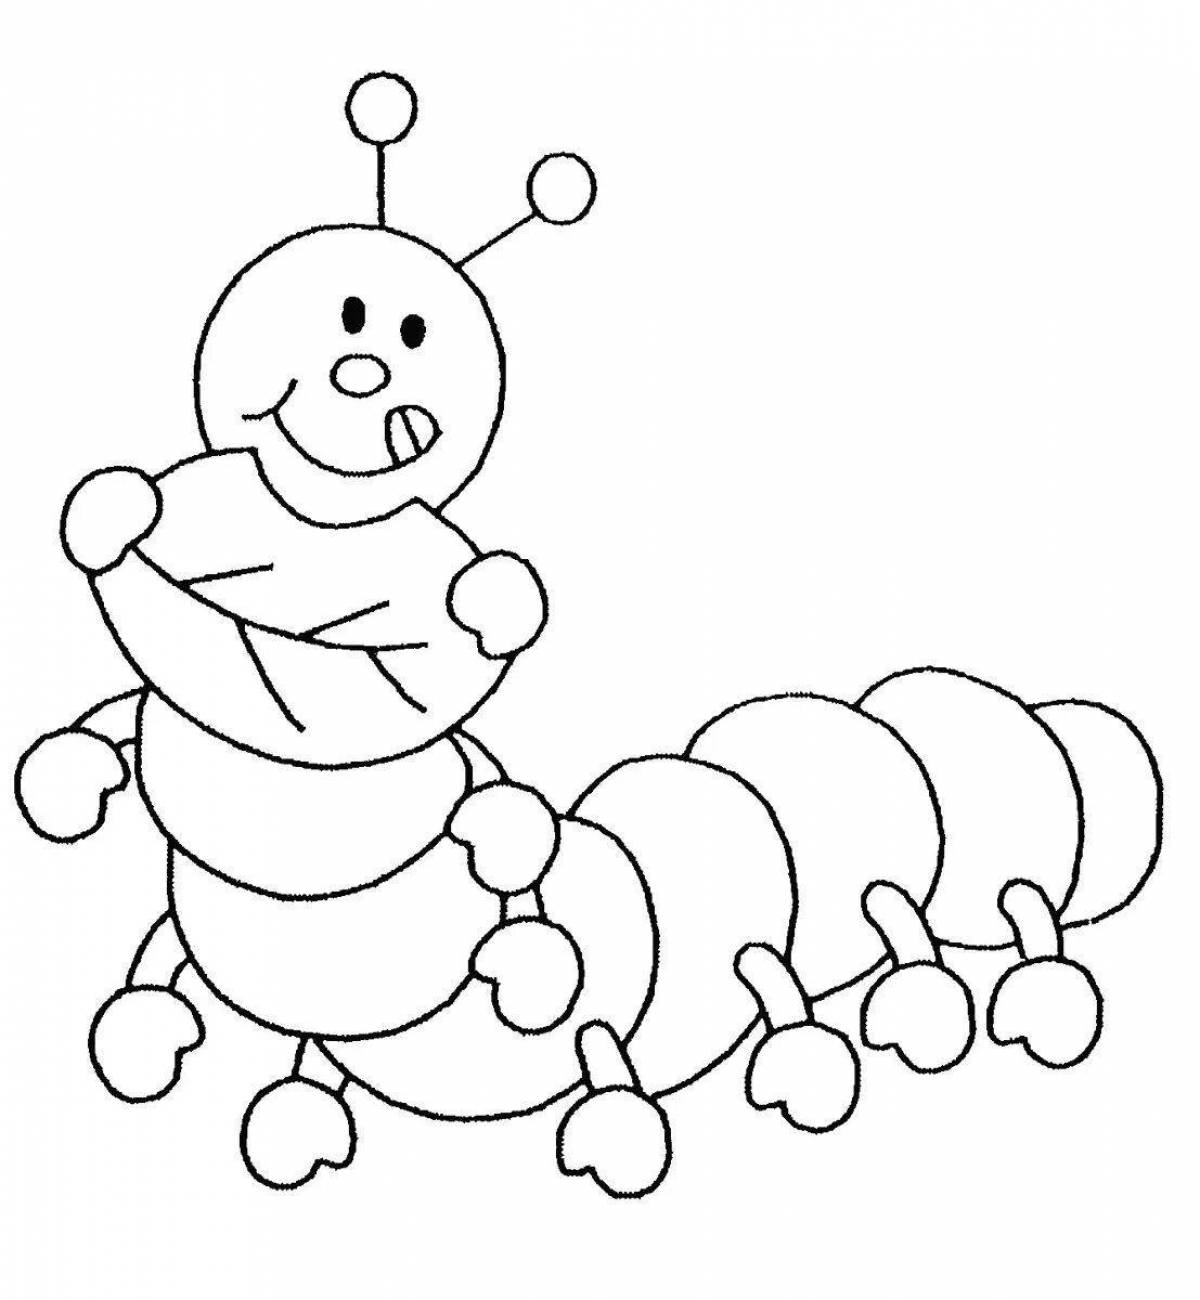 Live caterpillar coloring book for preschoolers